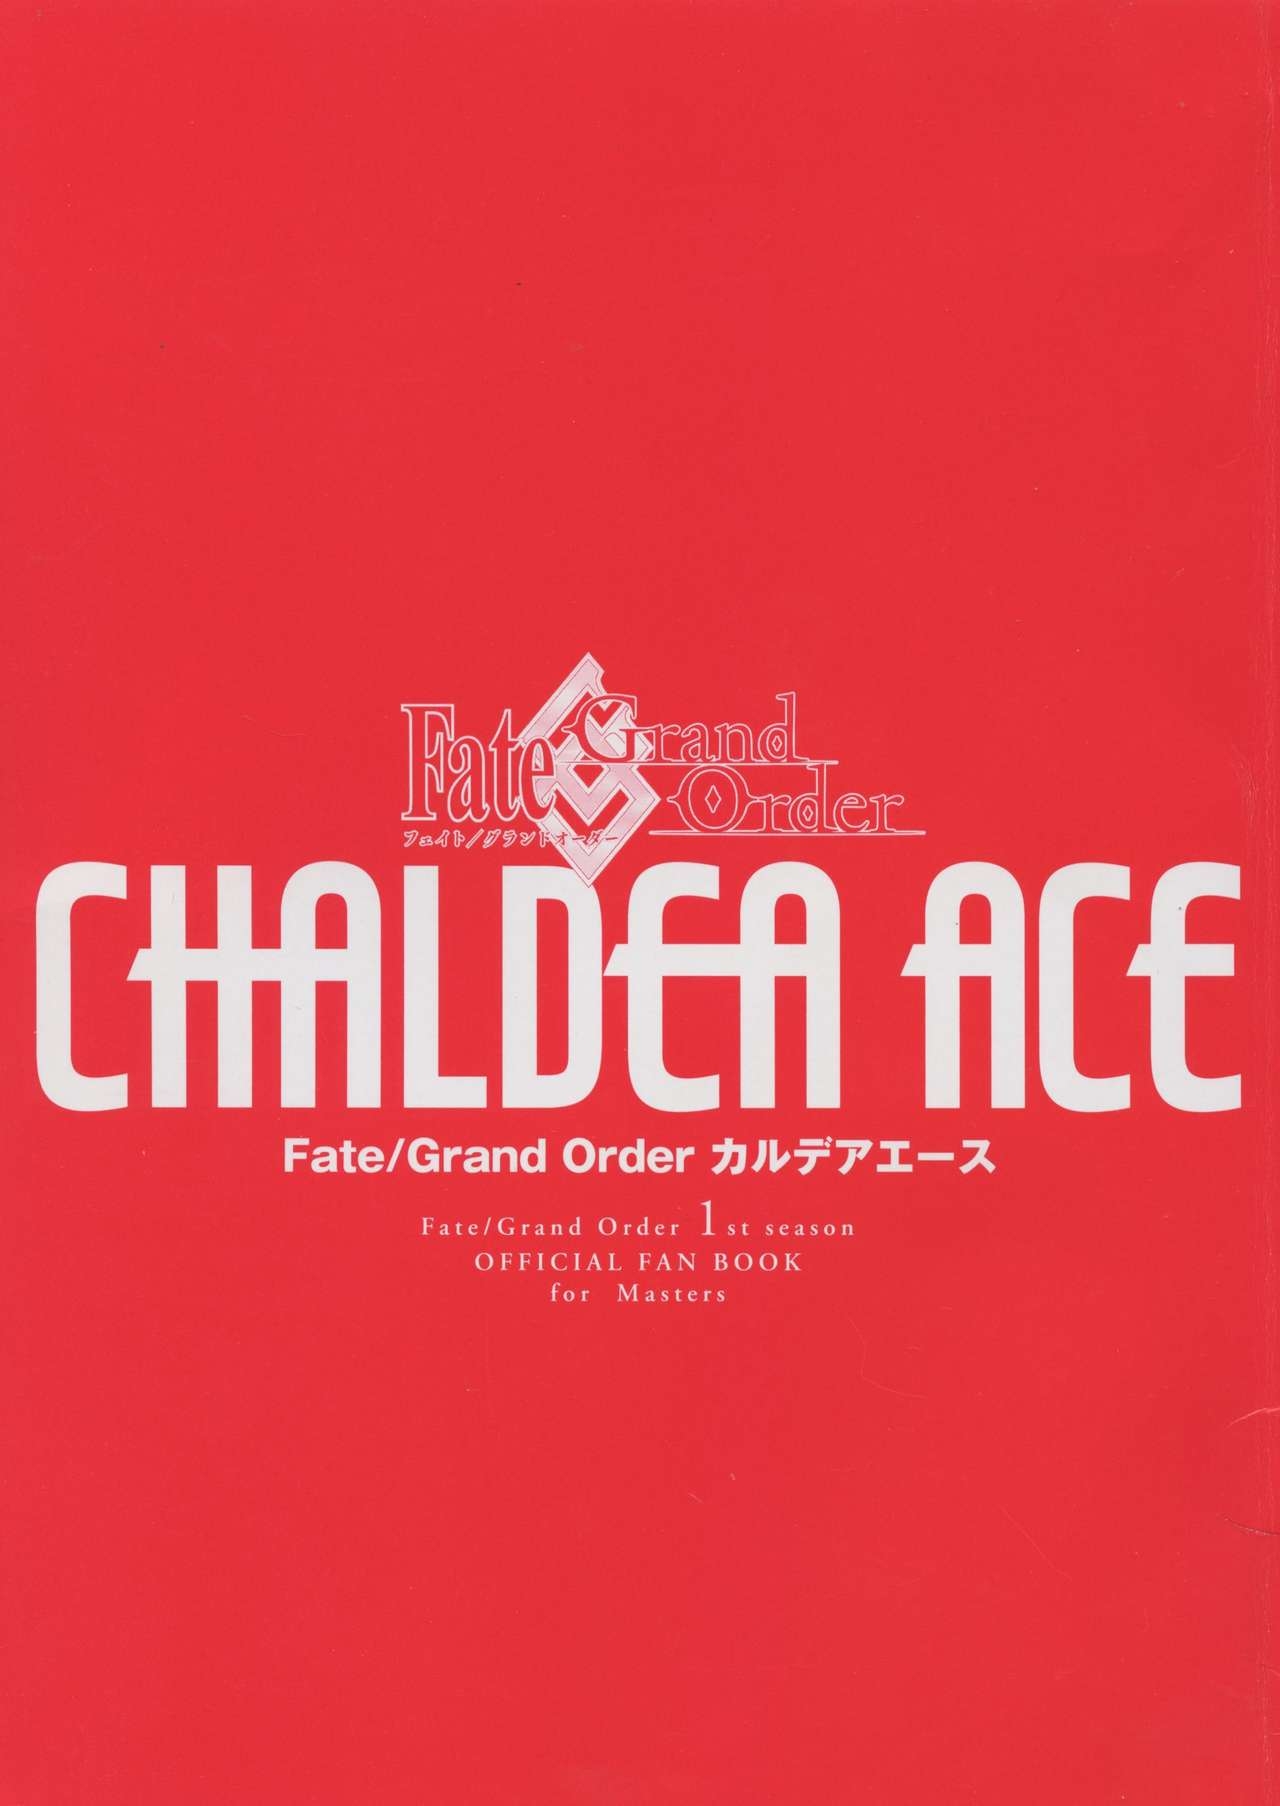 Fate Grand Order Chaldea Ace 2